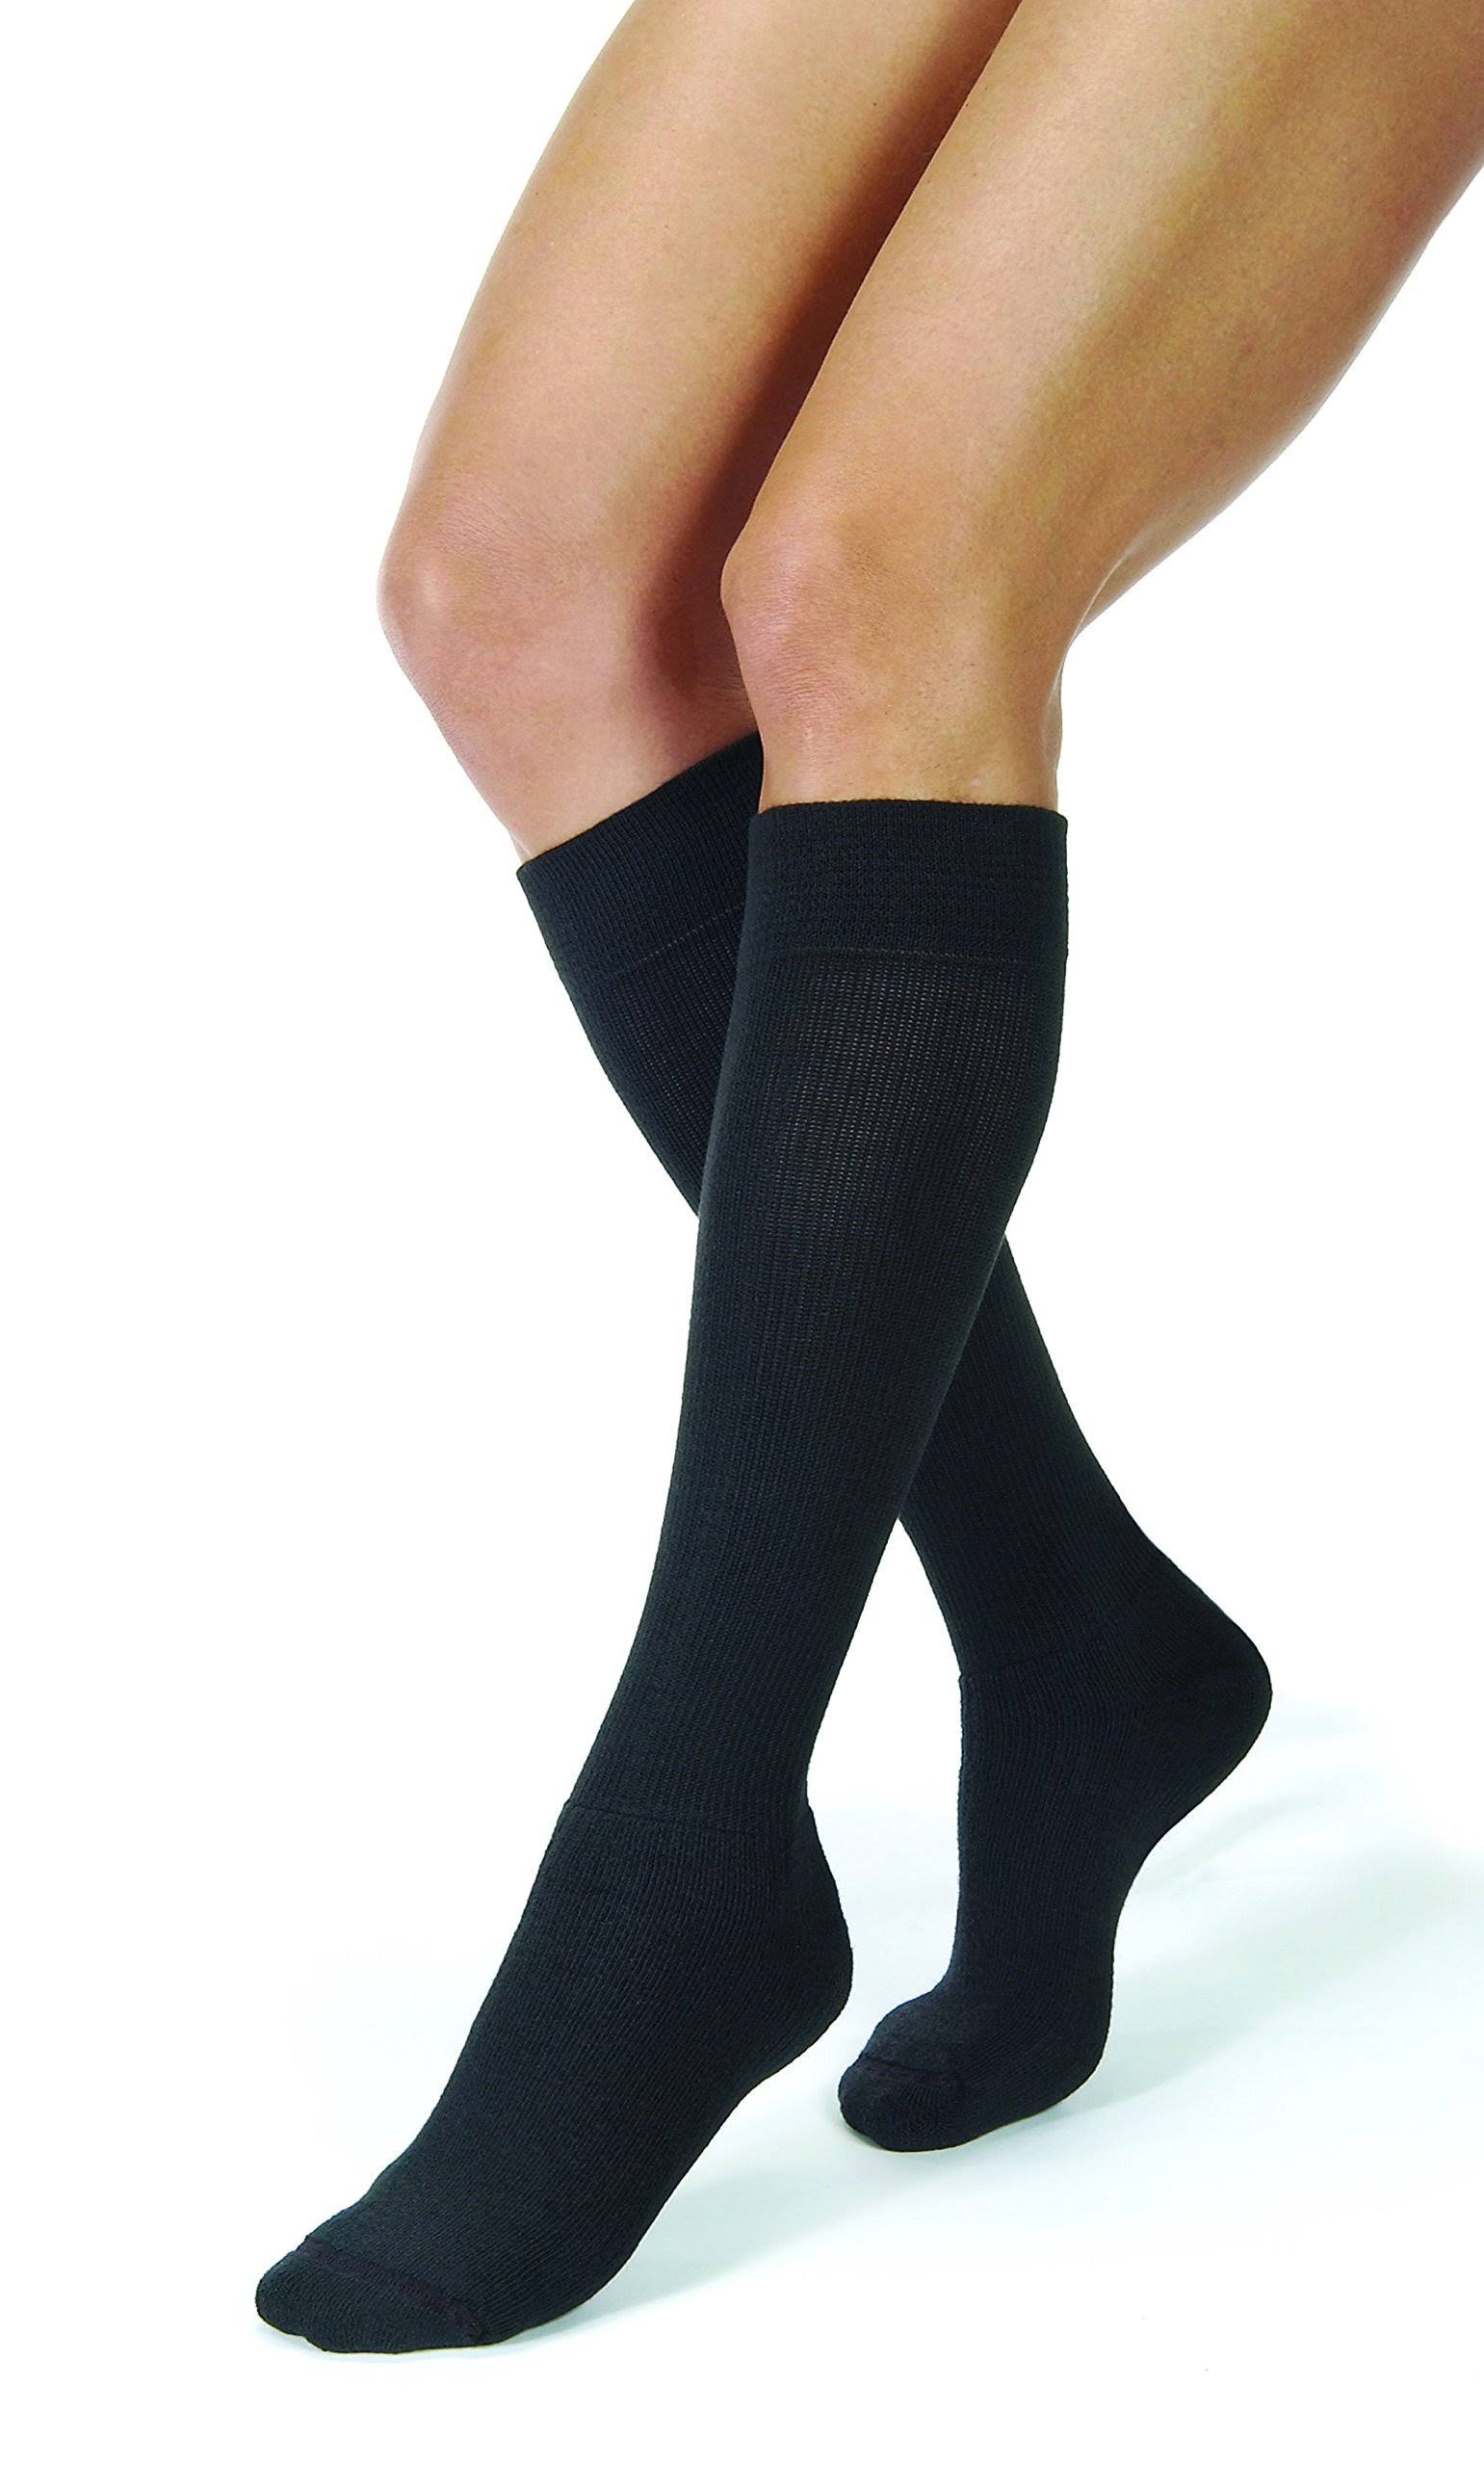 BI110494 - Bsn Jobst JOBST ActiveWear Knee-High Firm Compression Socks - Medium, Cool Black